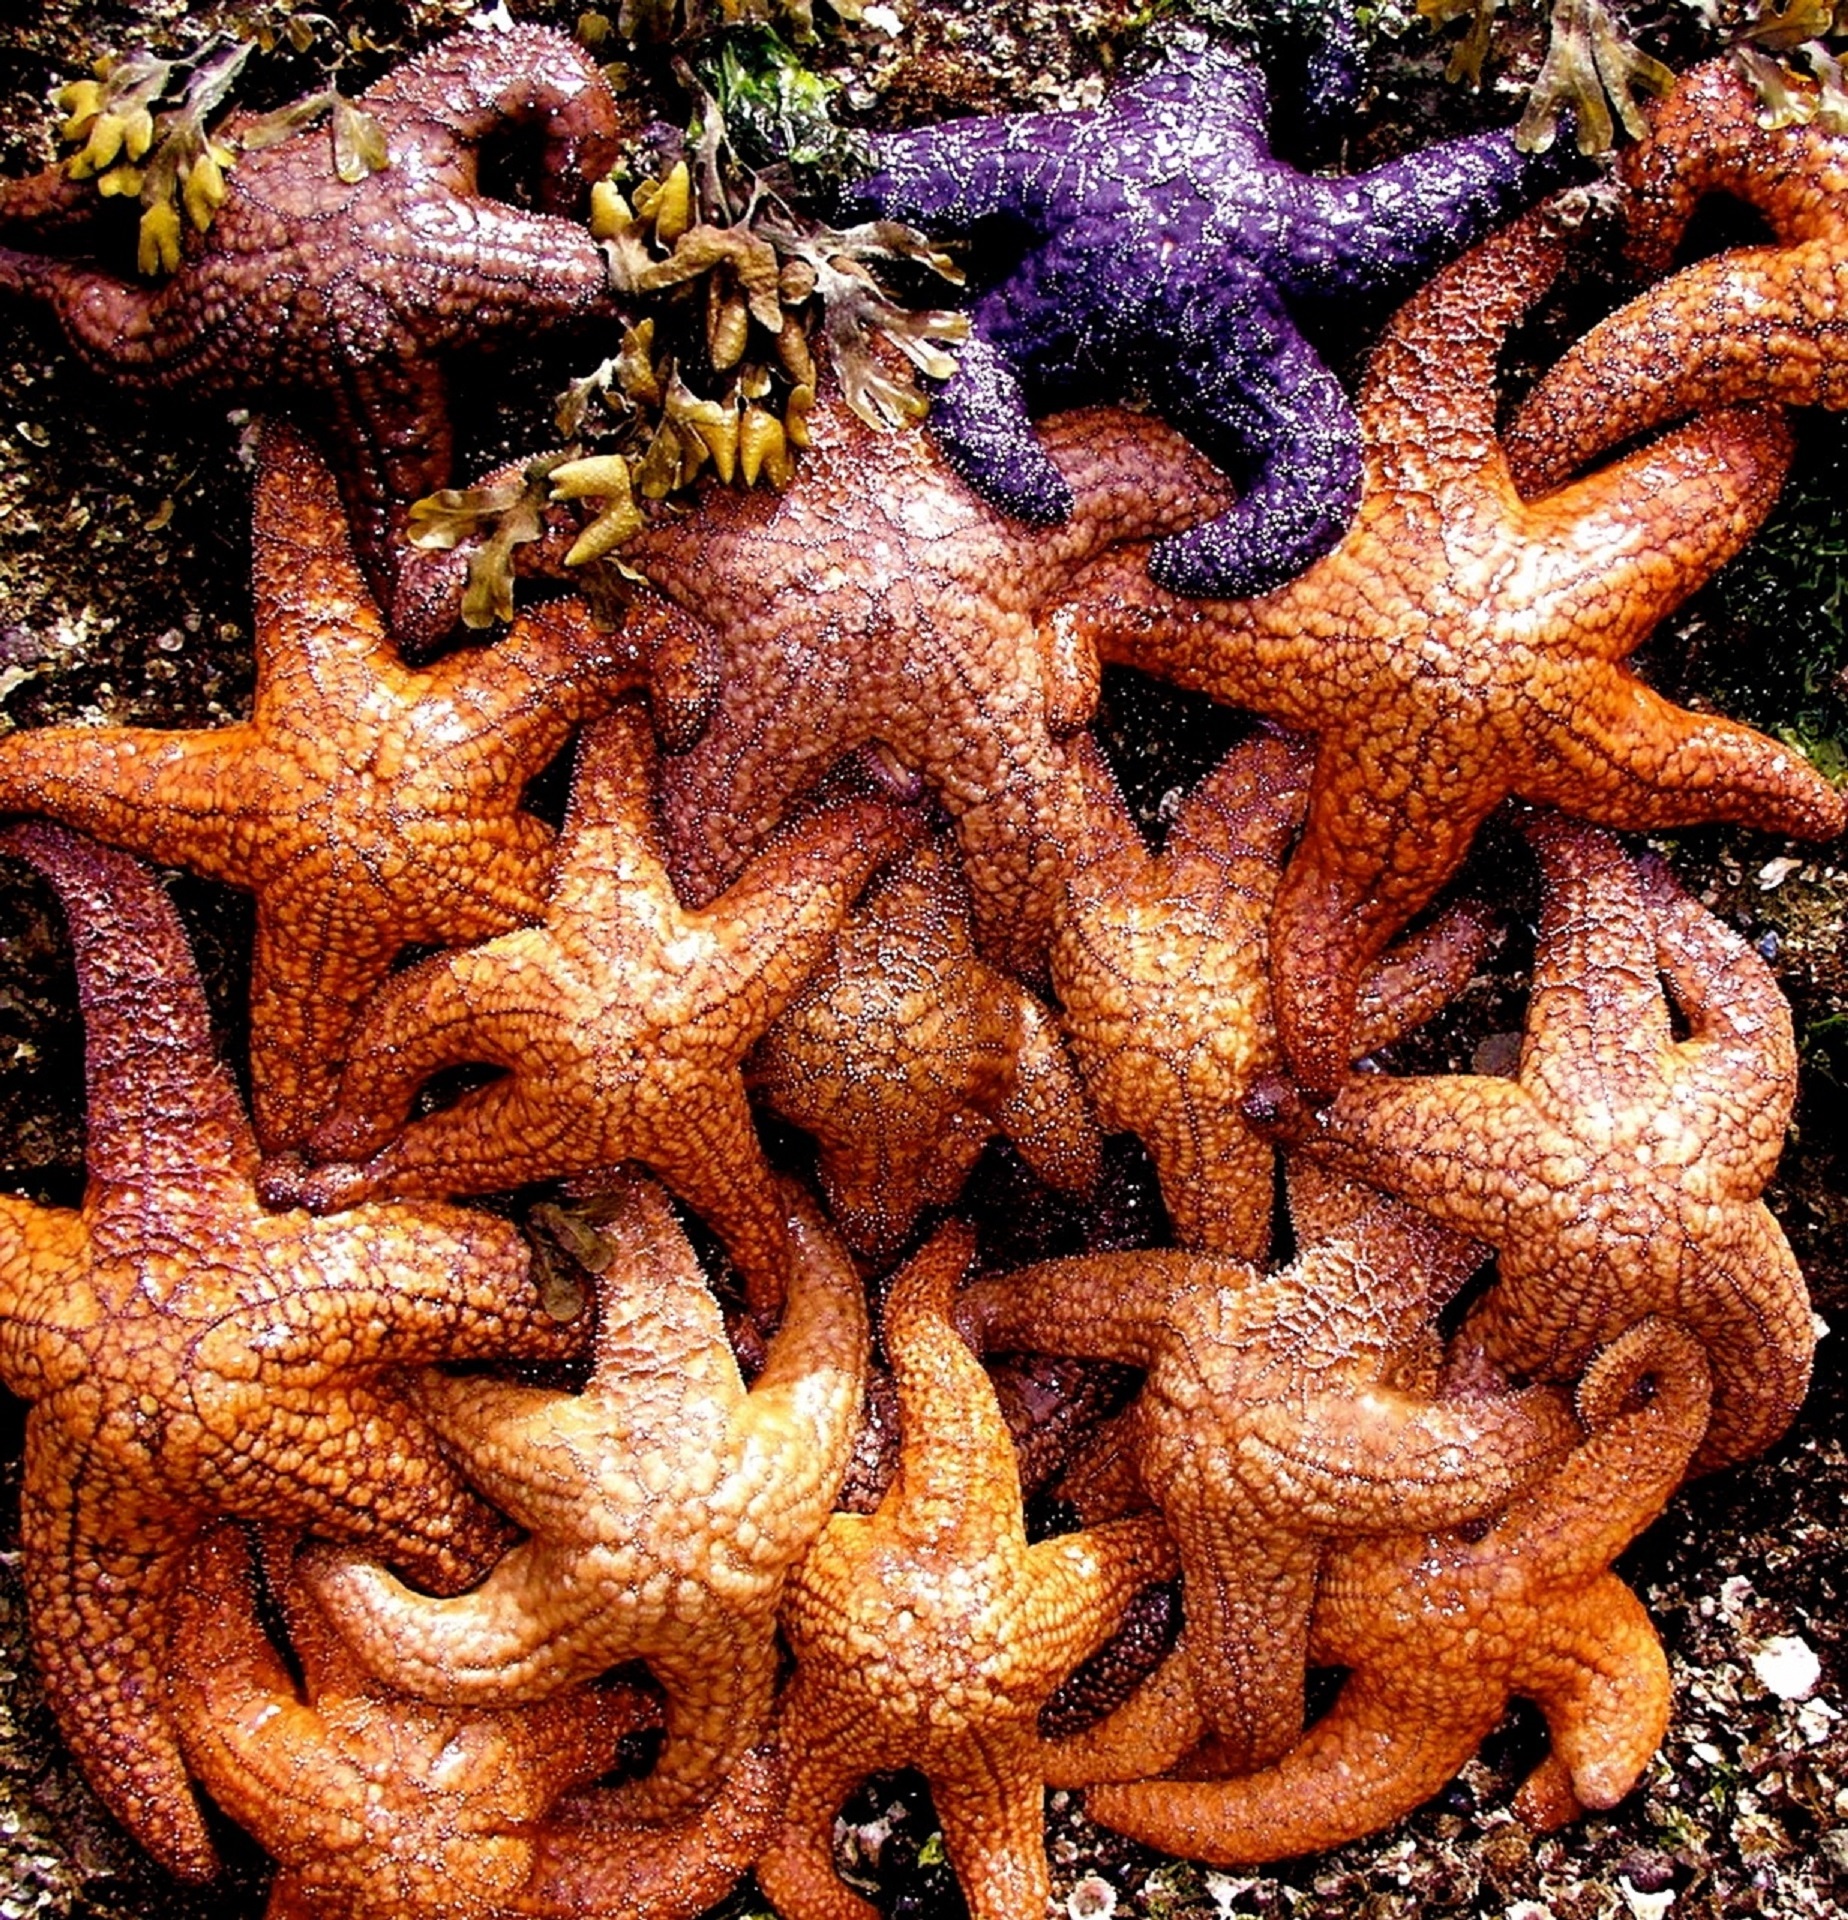 Group of Starfish, Animal, Fish, Group, Nature, HQ Photo